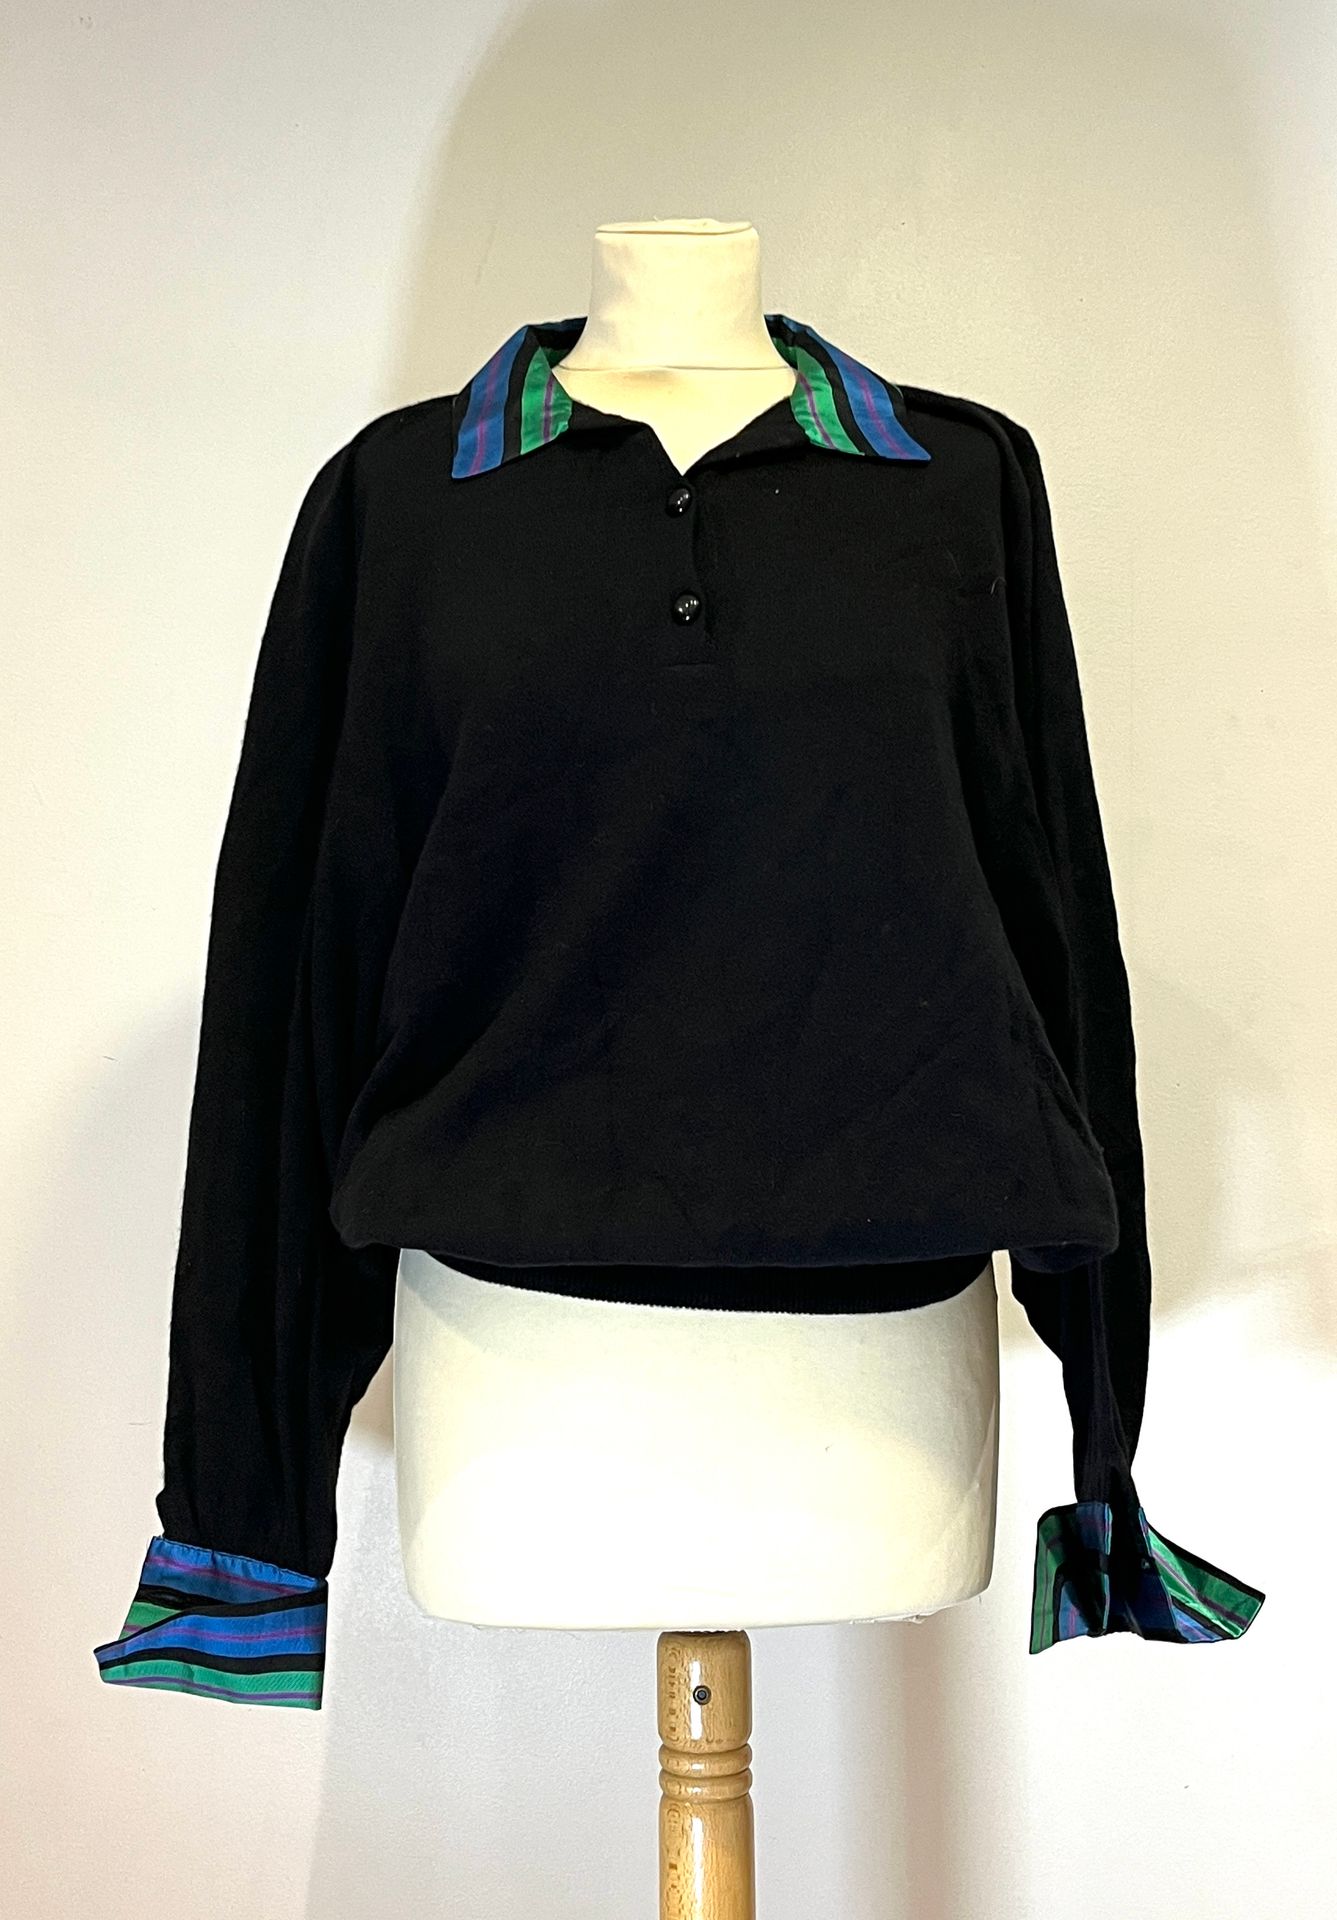 Null VALENTINO BOUTIQUE - 黑色羊绒超大毛衣，条纹丝绸衬衫领口和袖口。领口上的扣子。